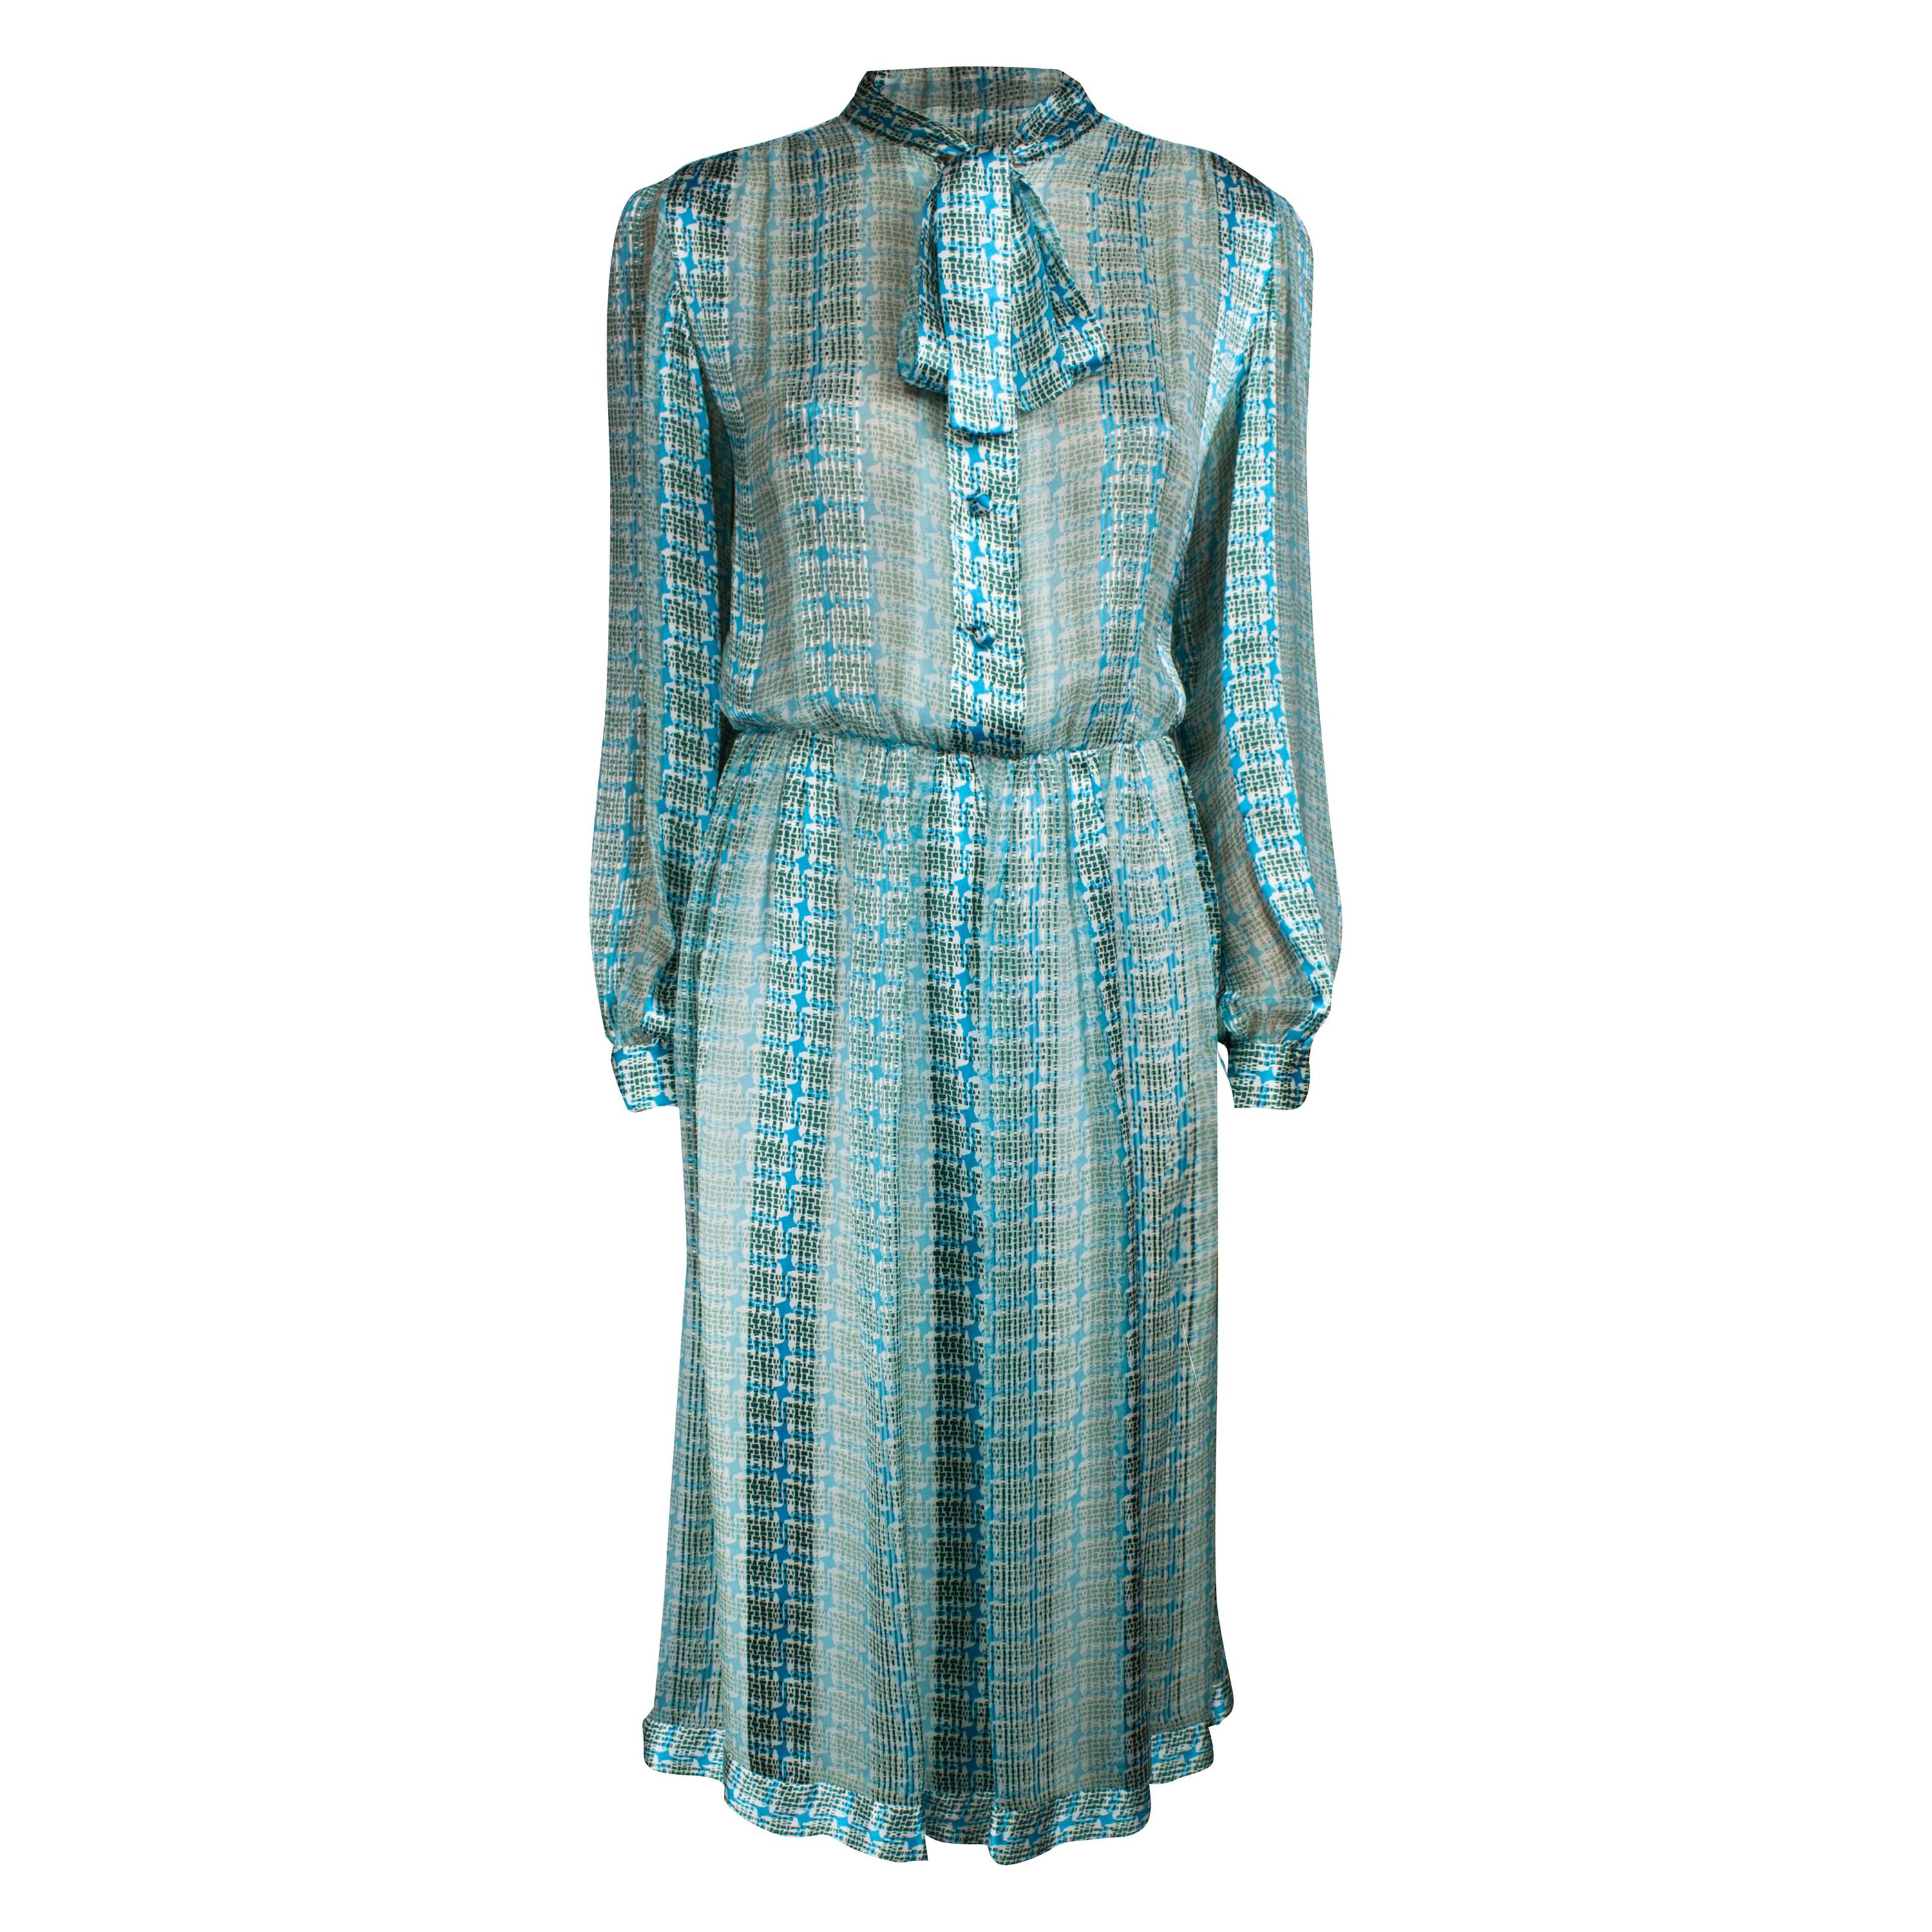 Jacques Heim delicate blue silk chiffon dress, circa 1960s